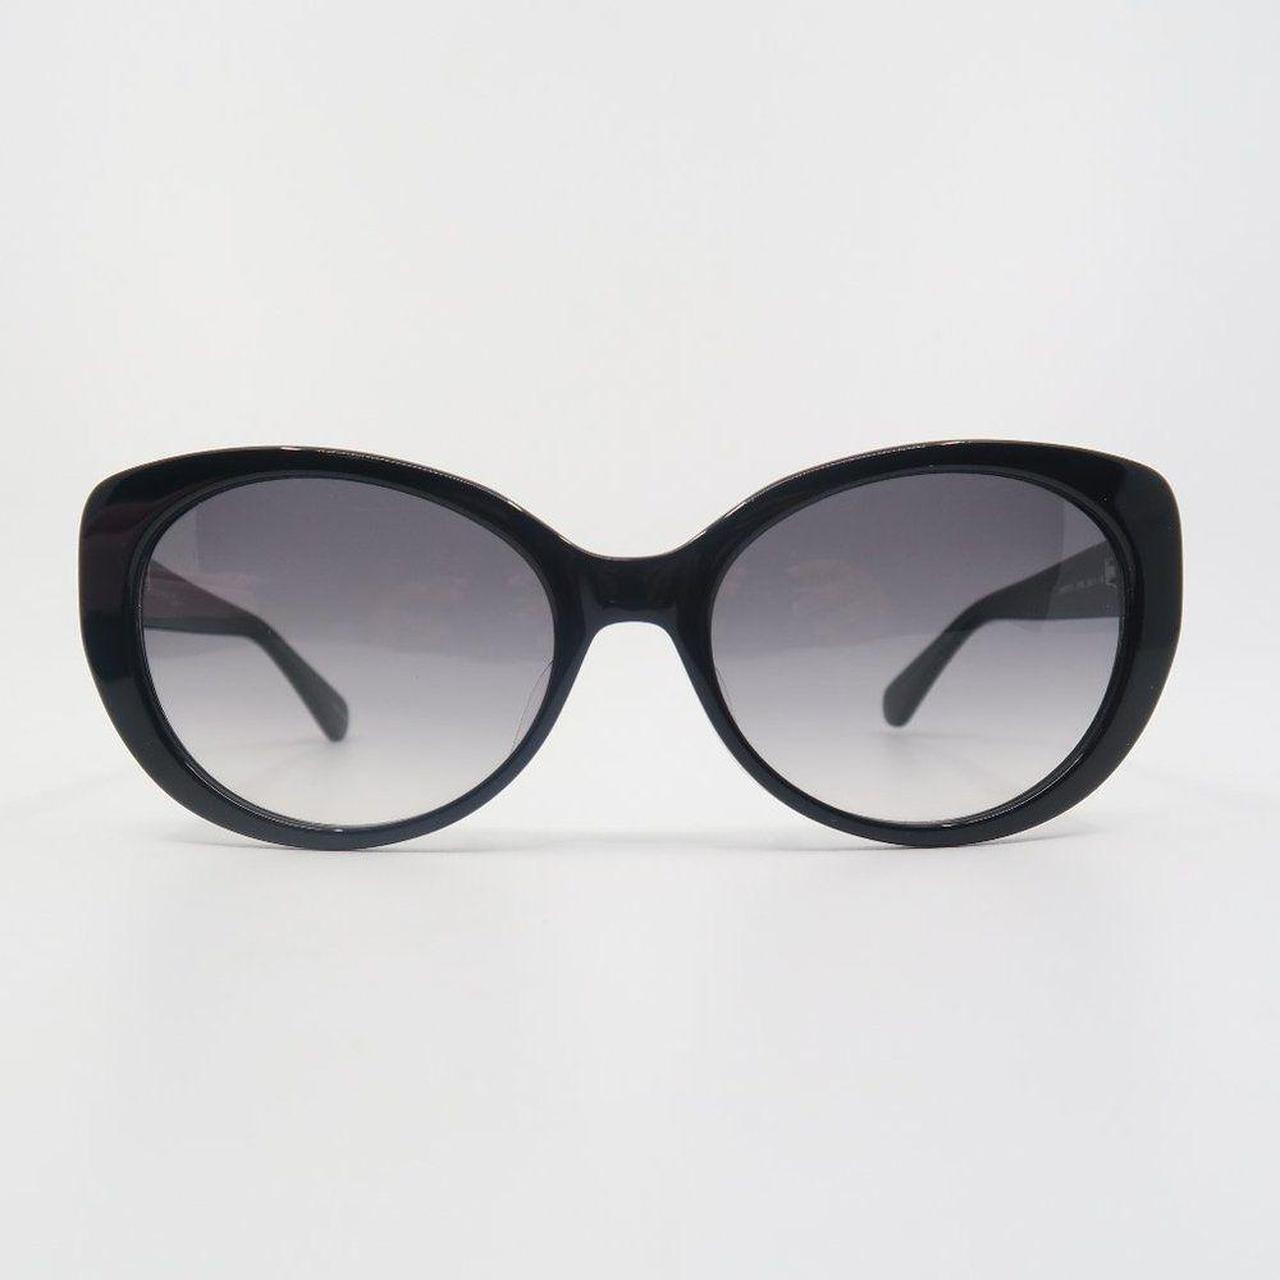 Kate Spade Everett/F/S Sunglasses